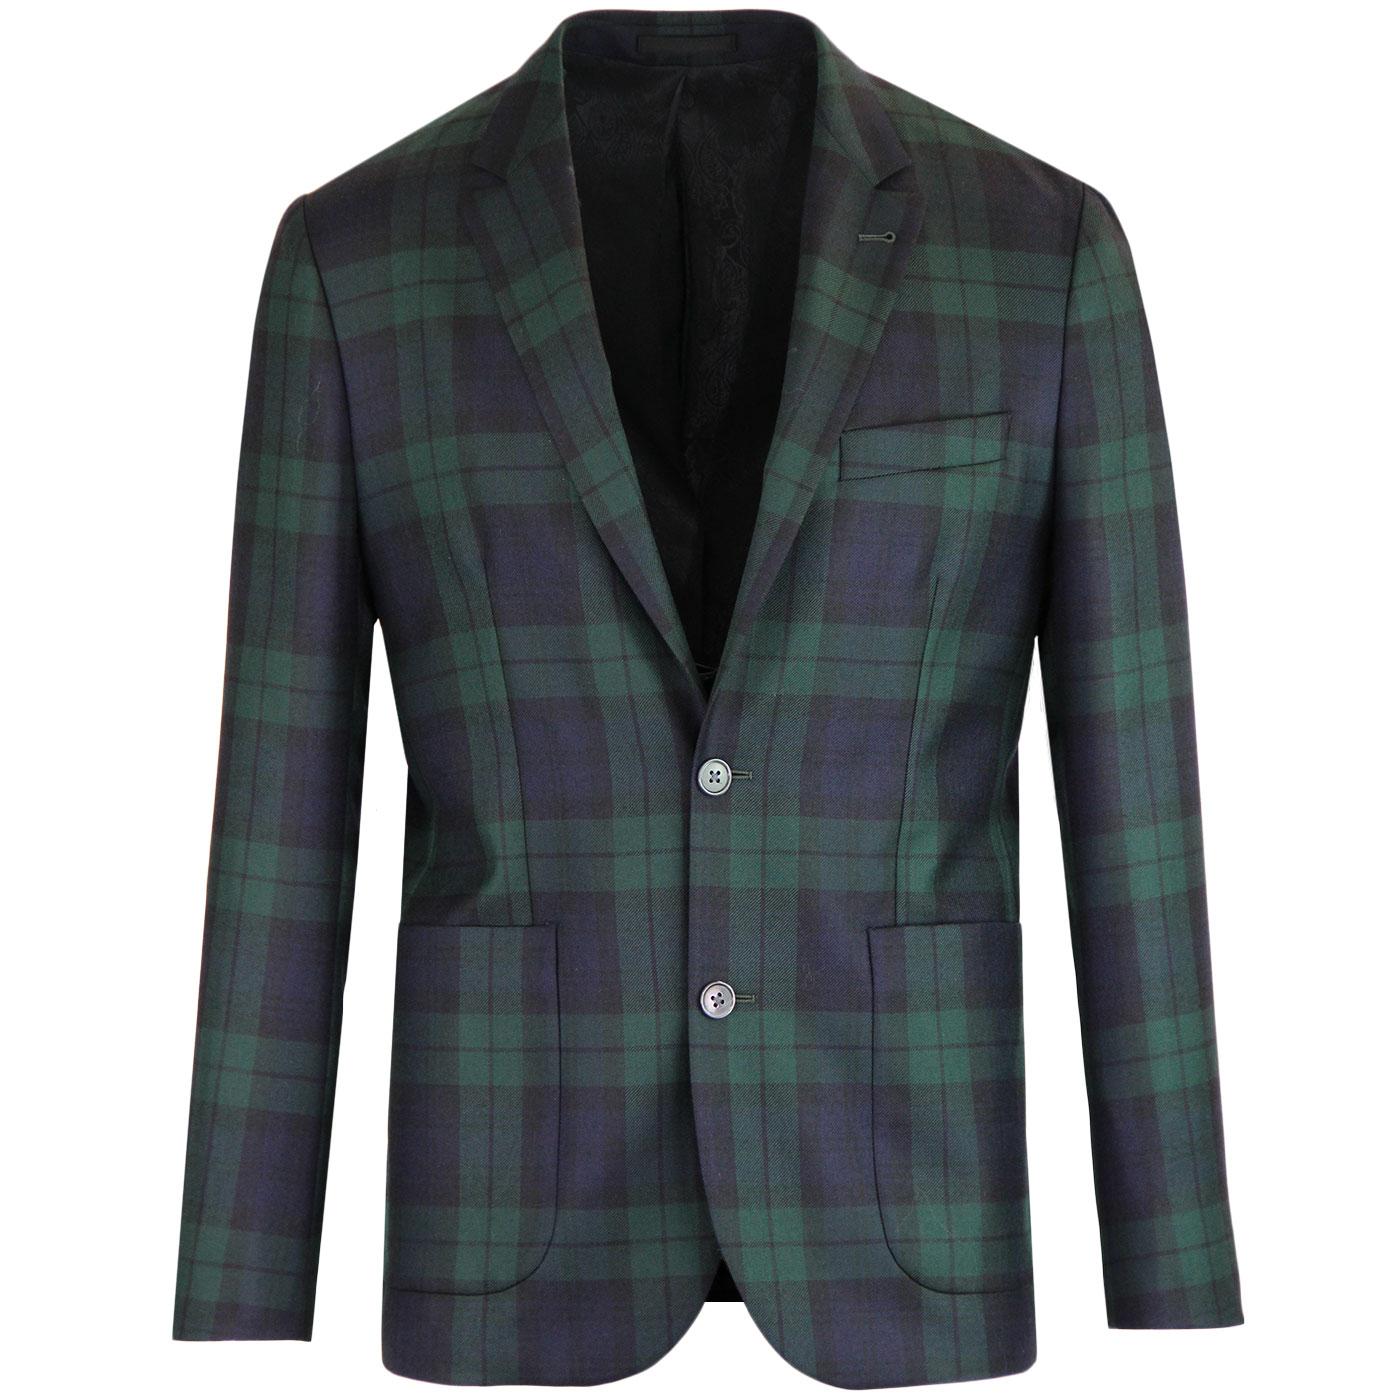 PRETTY GREEN Black Label 60s Mod Check Suit Jacket